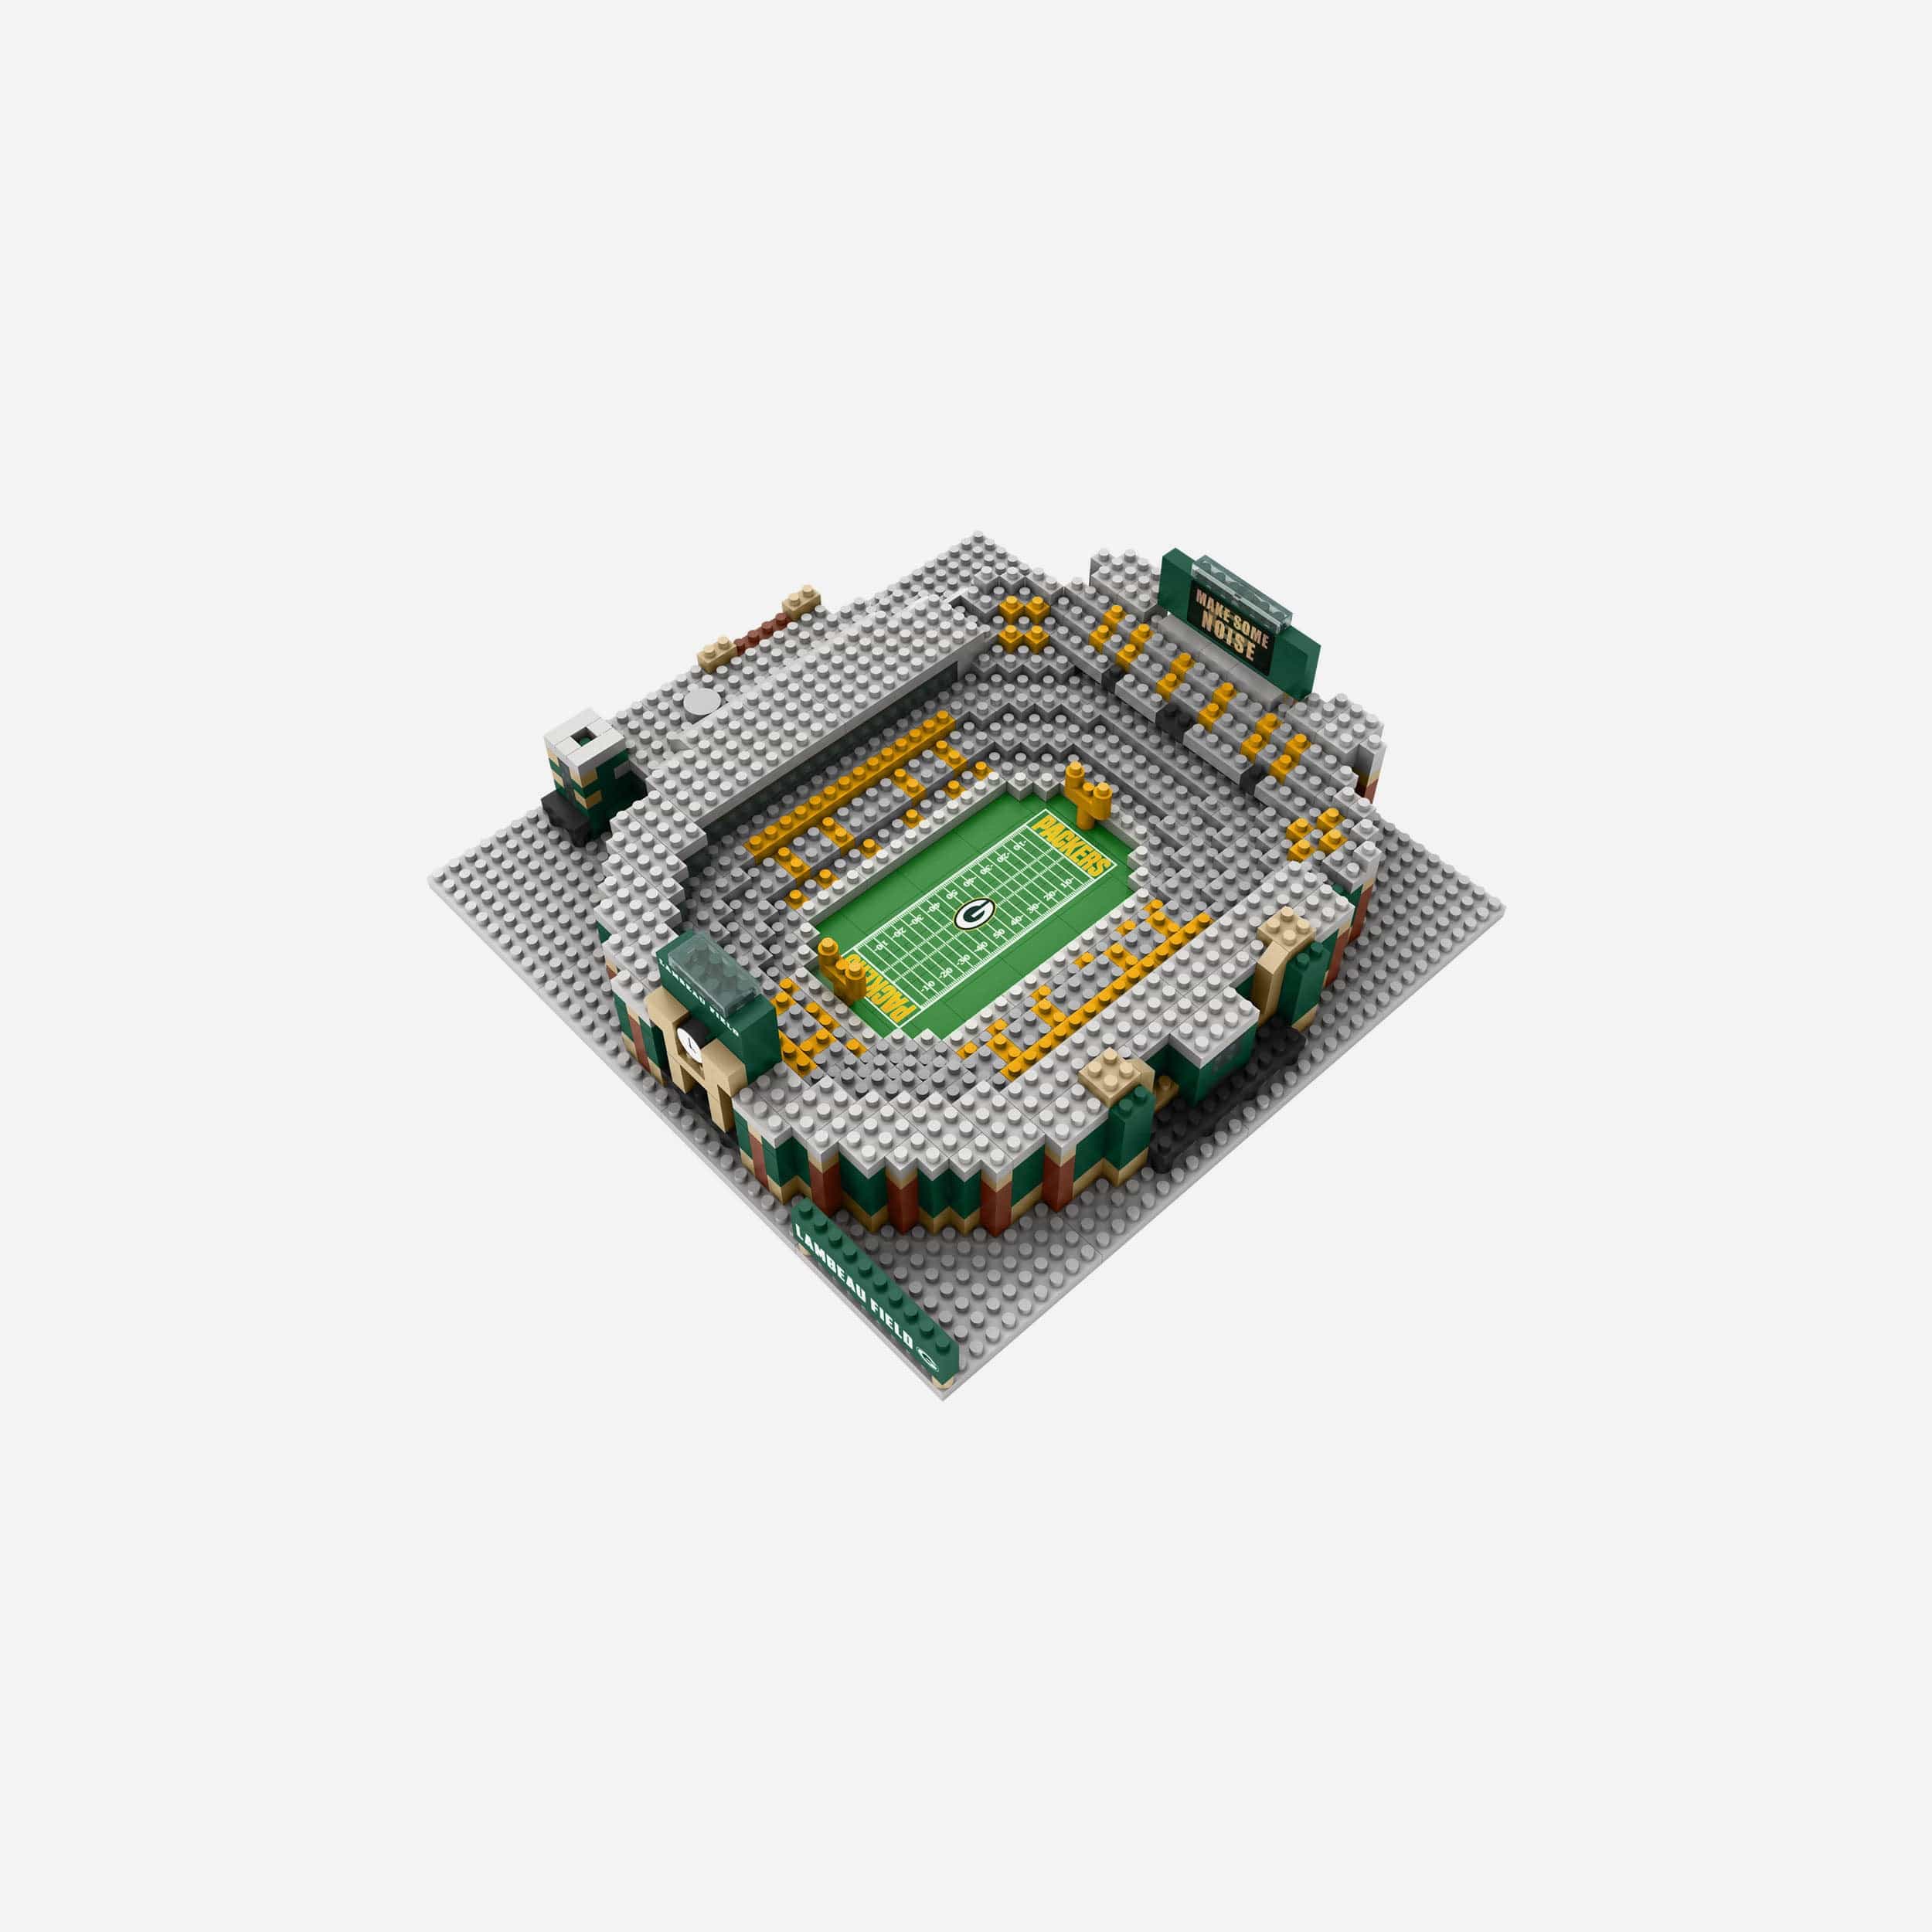 Green Bay Packers NFL Lambeau Field 3D BRXLZ Puzzle Stadium Blocks Set